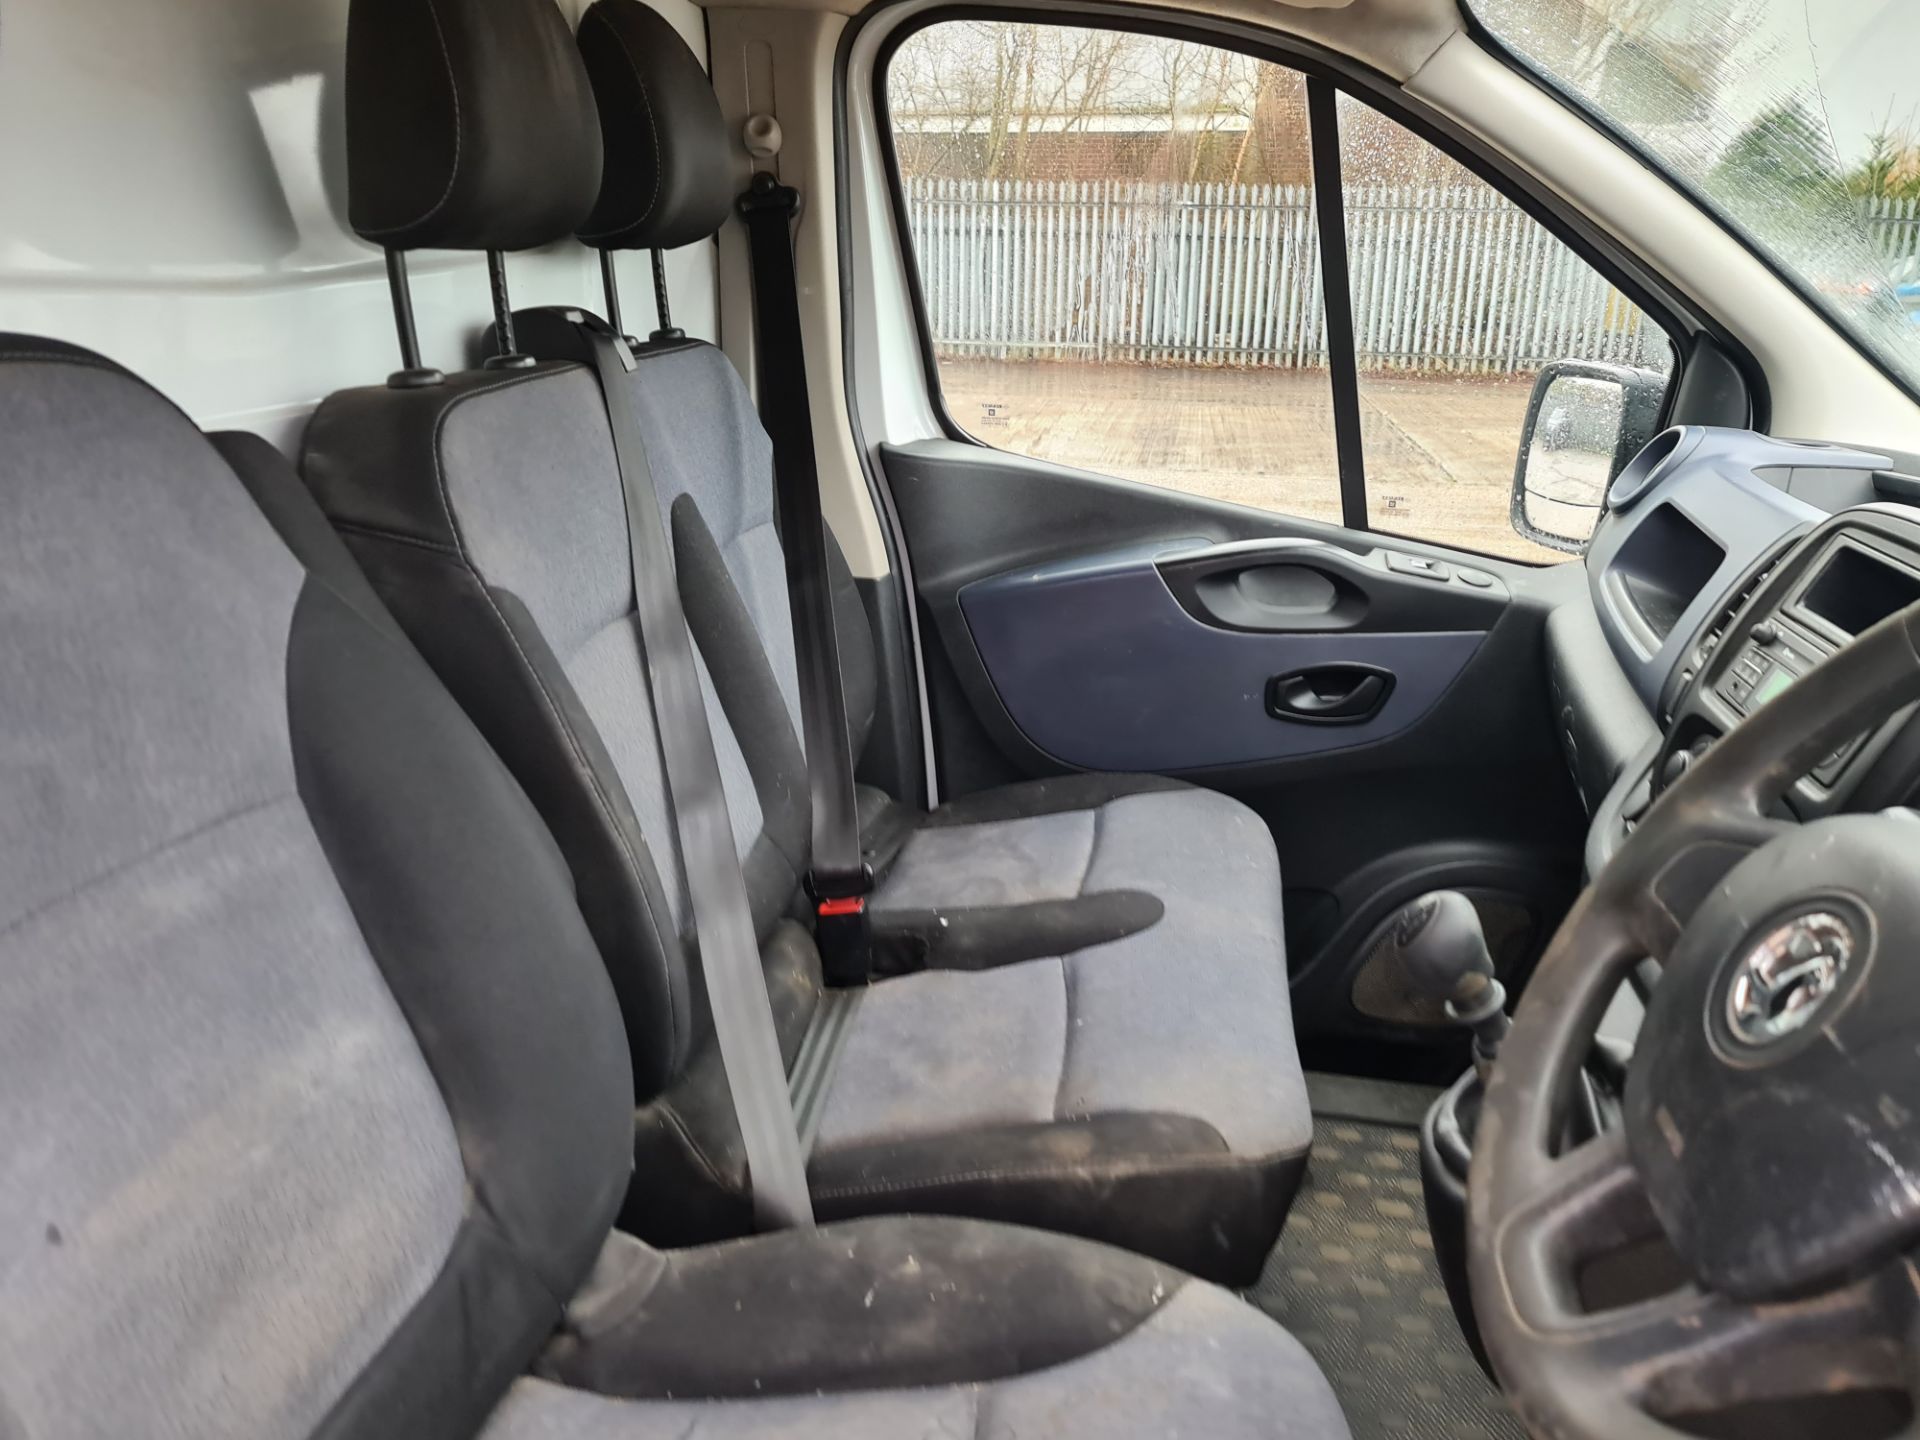 2015 Vauxhall Vivaro 2900 CDTi panel van - Image 20 of 66